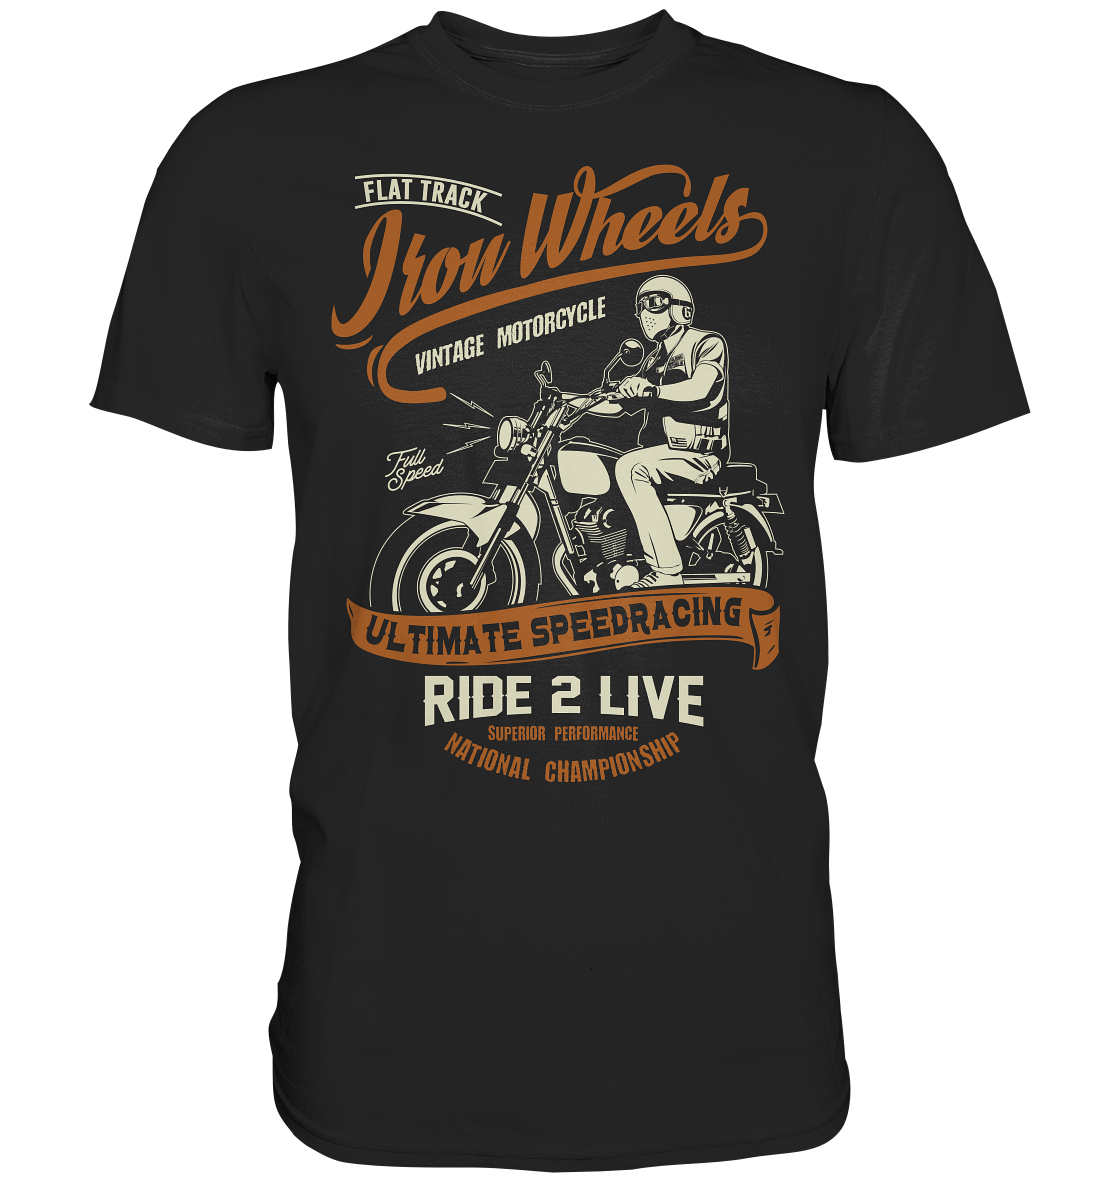 Iron wheels ultimate, ride 2 live - Premium unisex Shirt